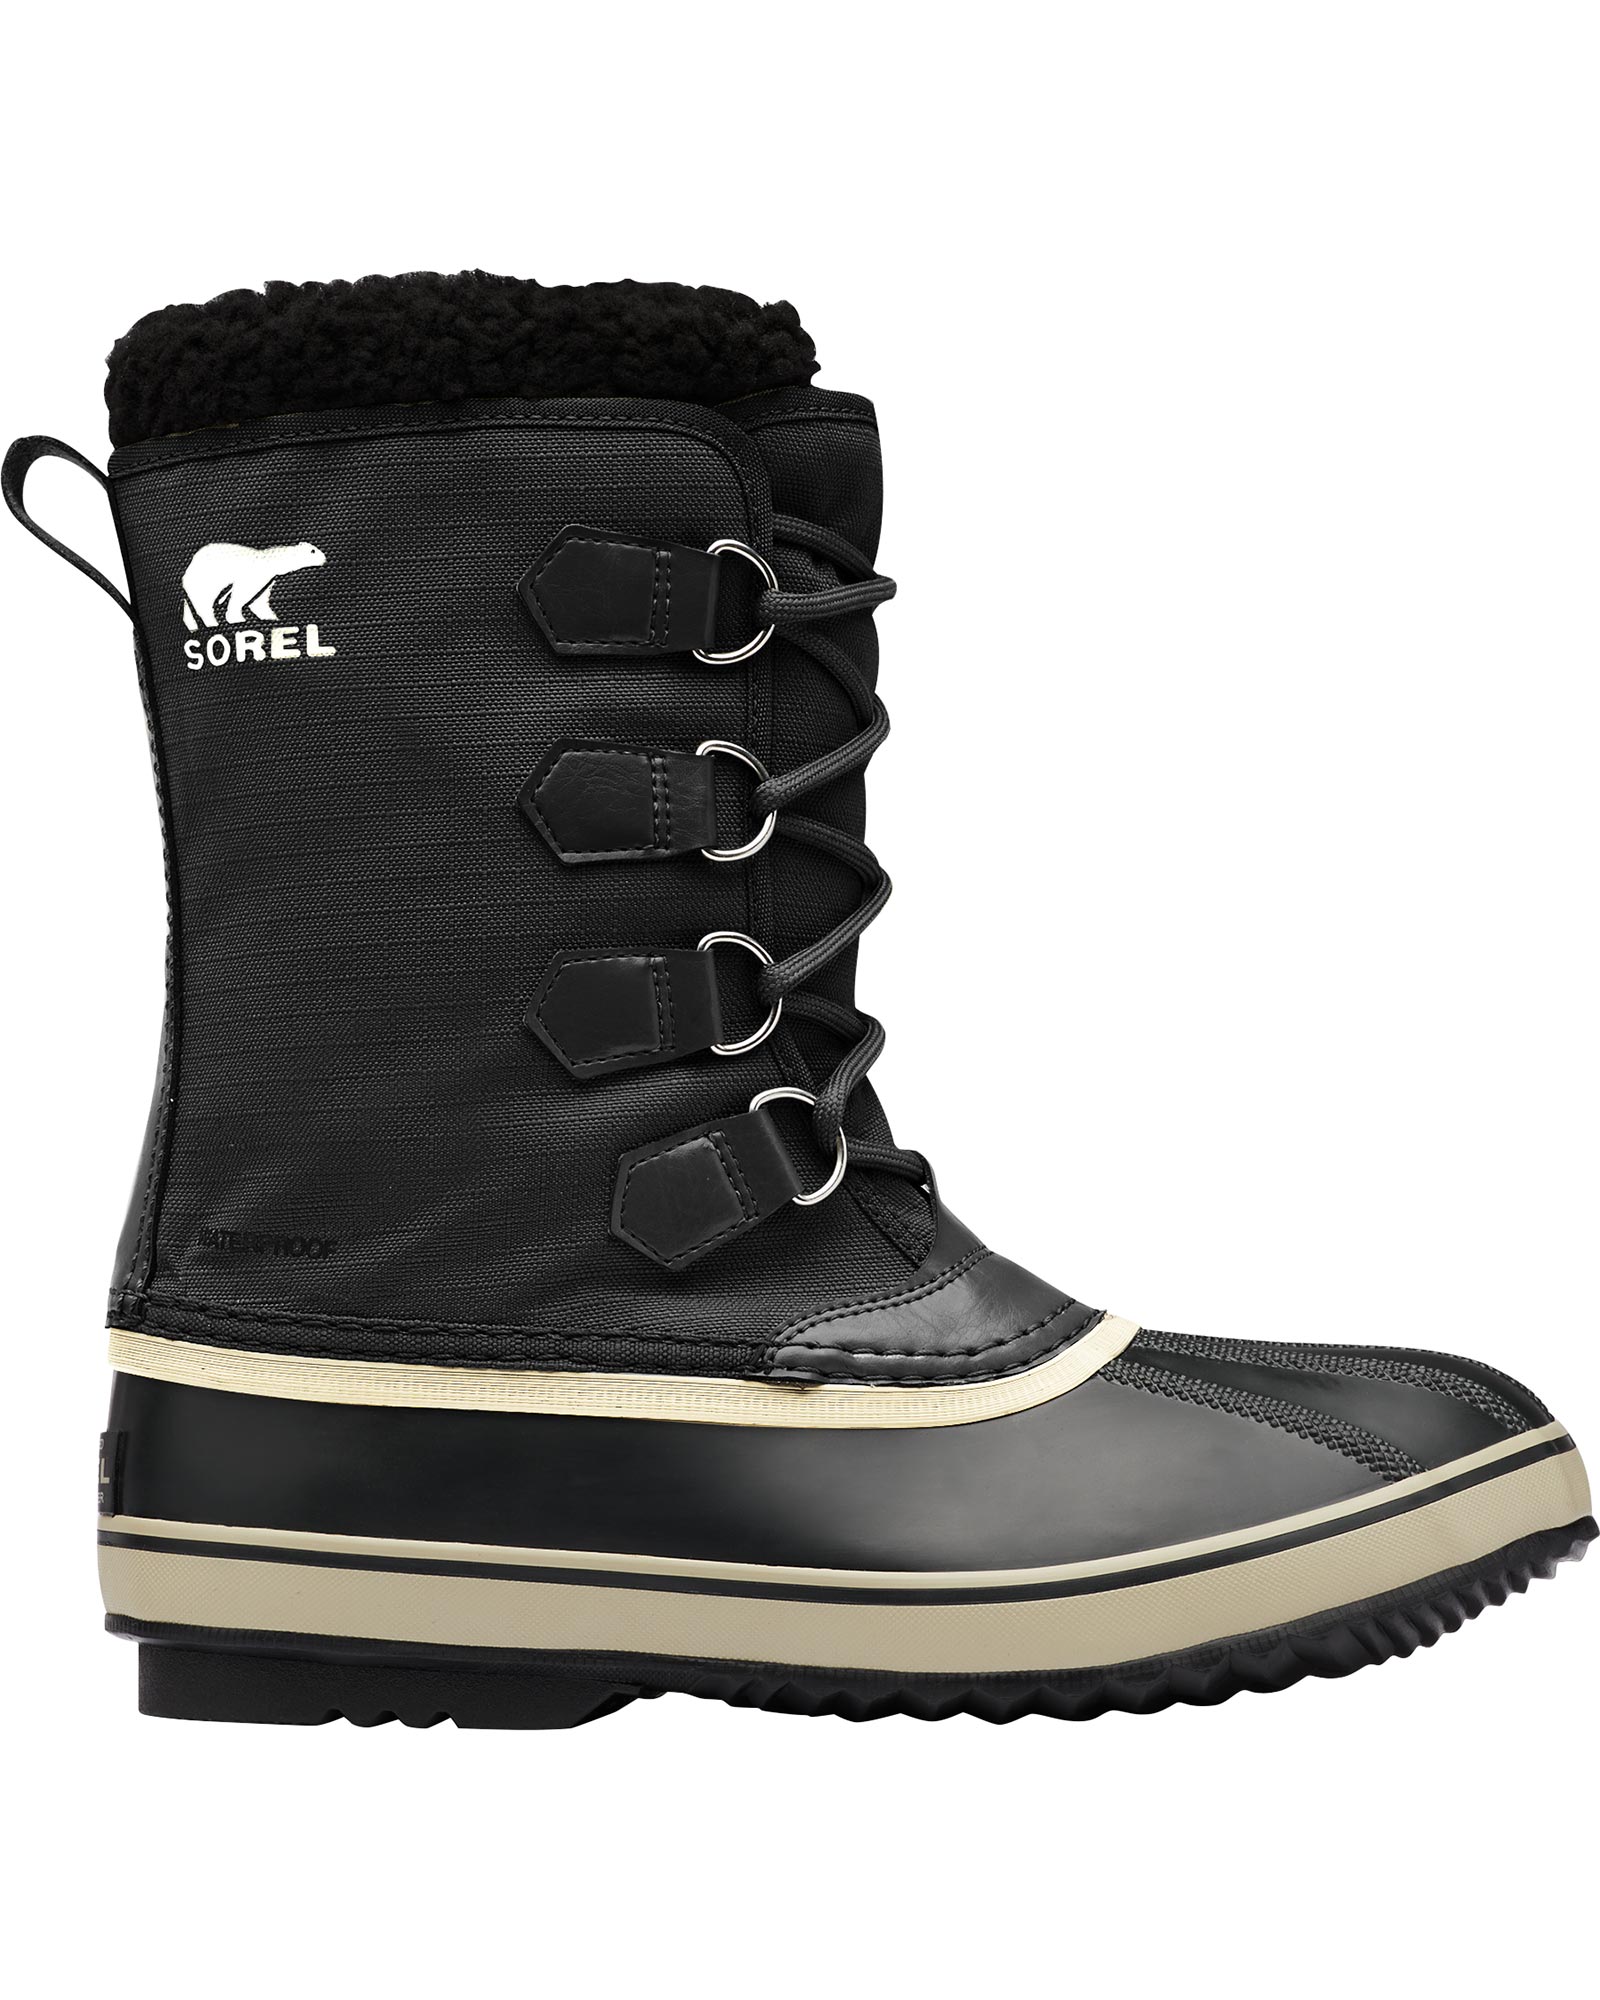 Sorel 1964 Pac Nylon Men’s Snow Boots - black UK 9